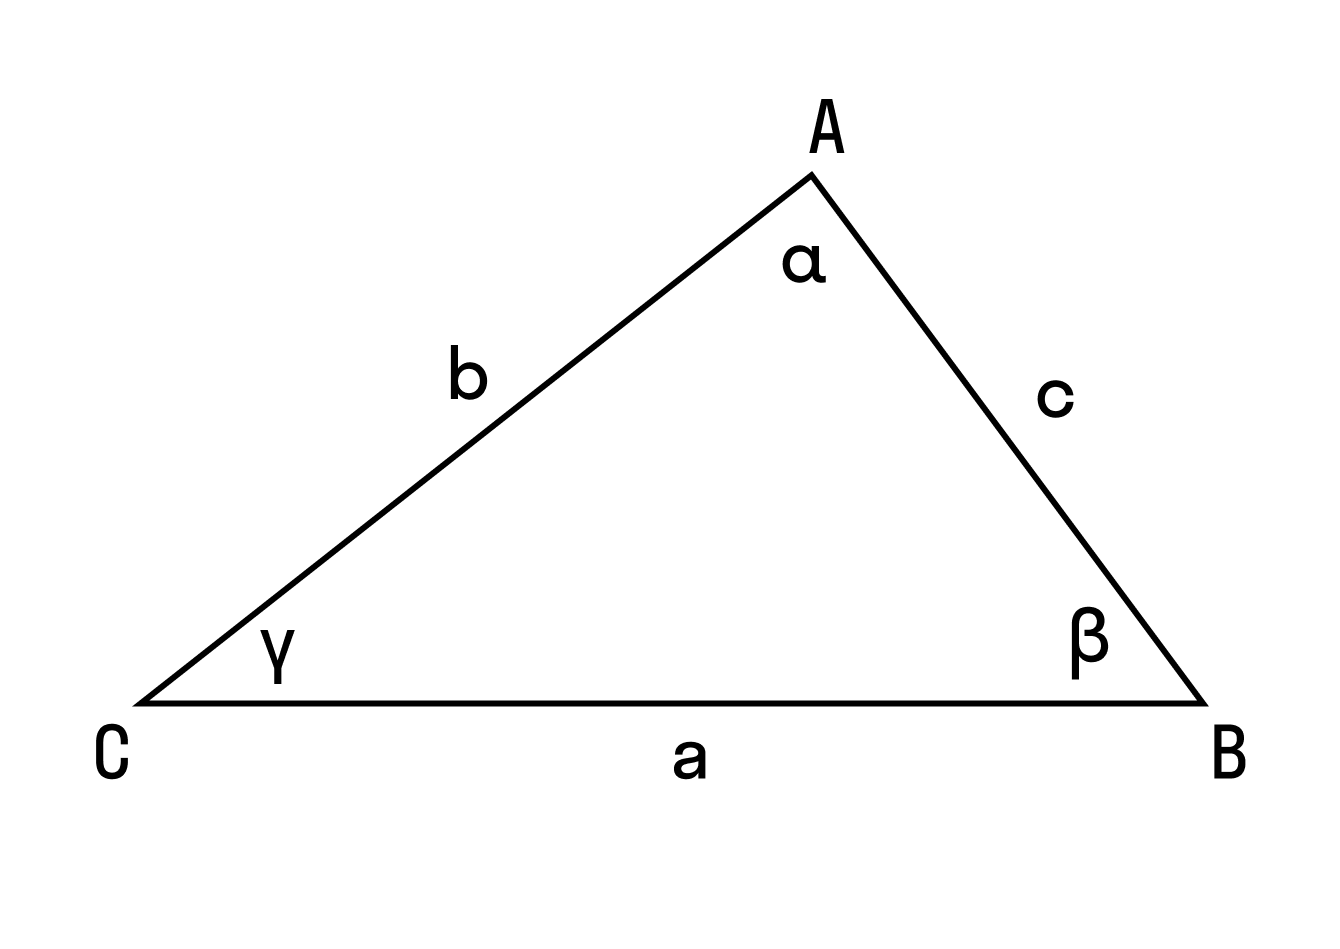 Треугольник stk синус. Теорема синусов и косинусов. Теорема синусов и косинусов для треугольника. Теорема косинусов. Теорема синусов.